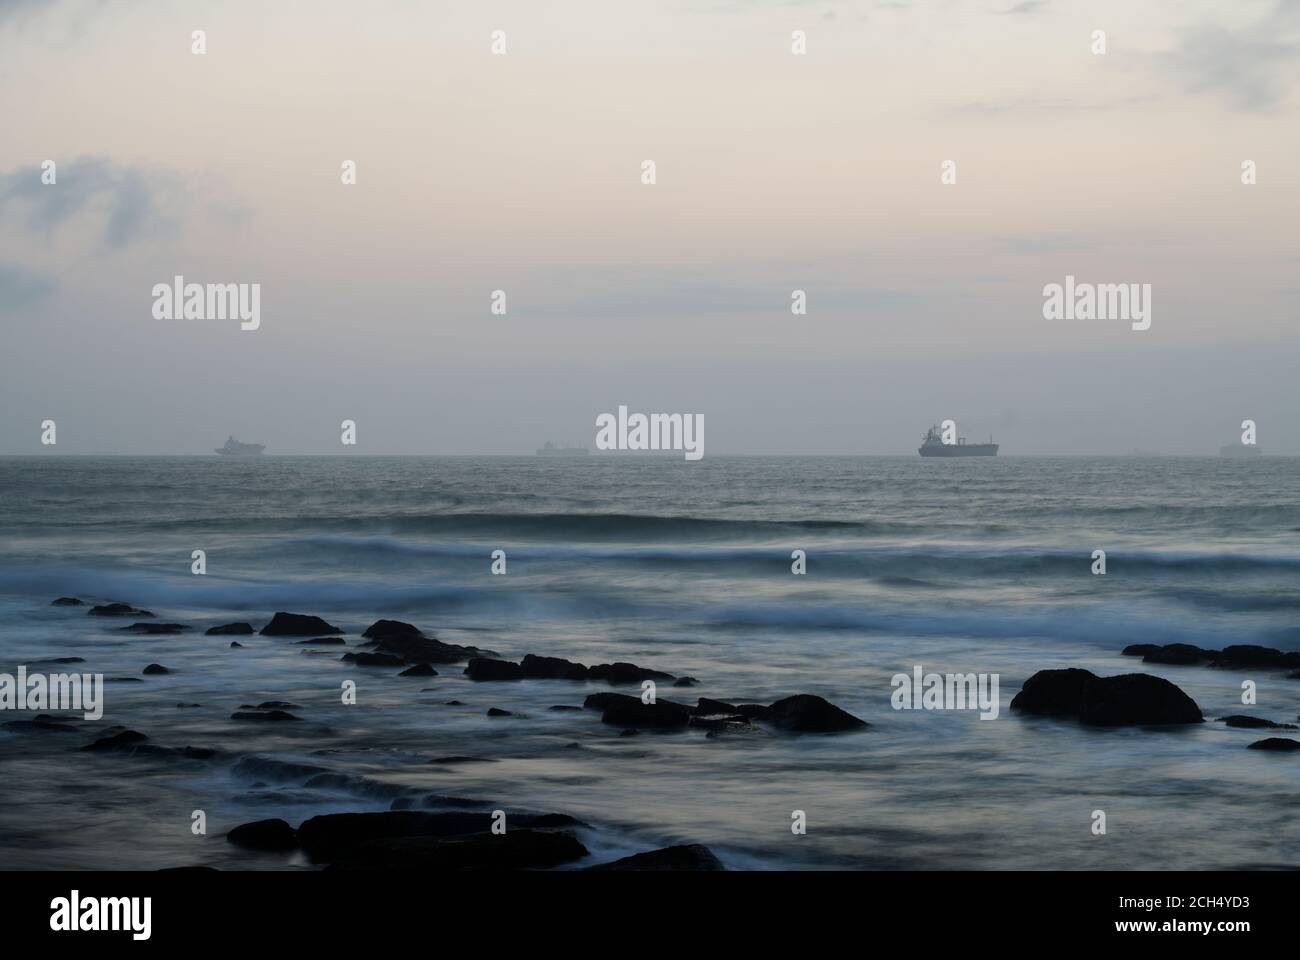 Beautiful artistic seascape, ships on horizon, motion blur, Durban, South Africa, landscape, creative, backgrounds, atmosphere, mood, coast, coastal Stock Photo